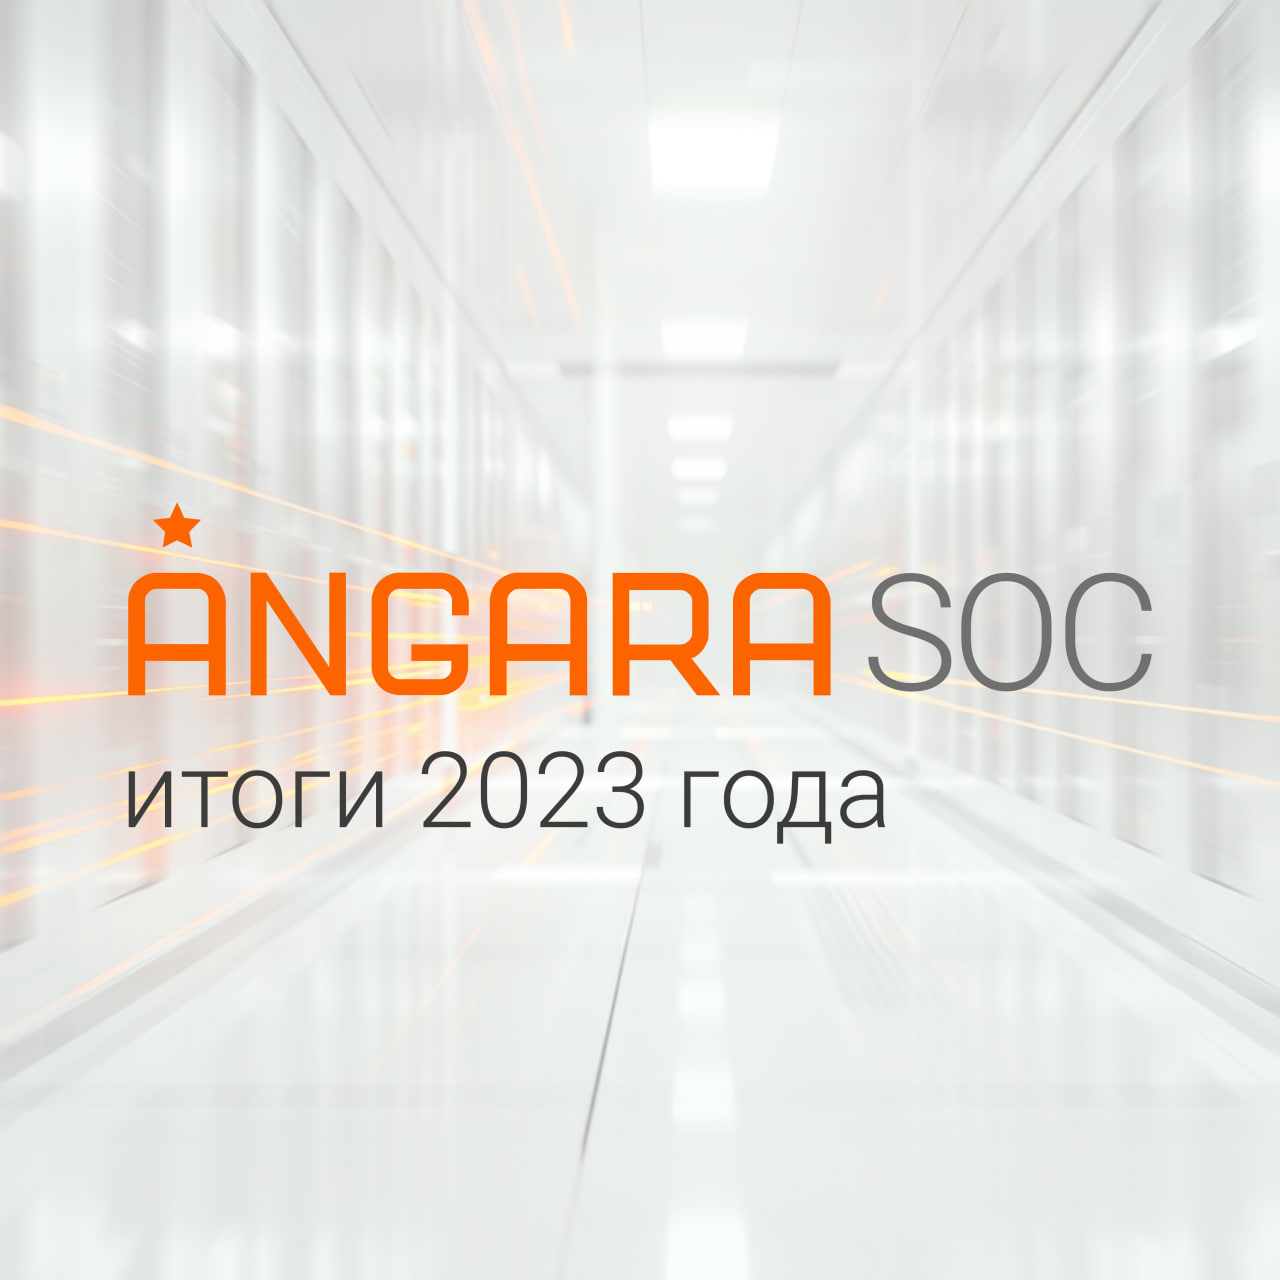 Центр киберустойчивости Angara SOC подвел итоги 2023 года